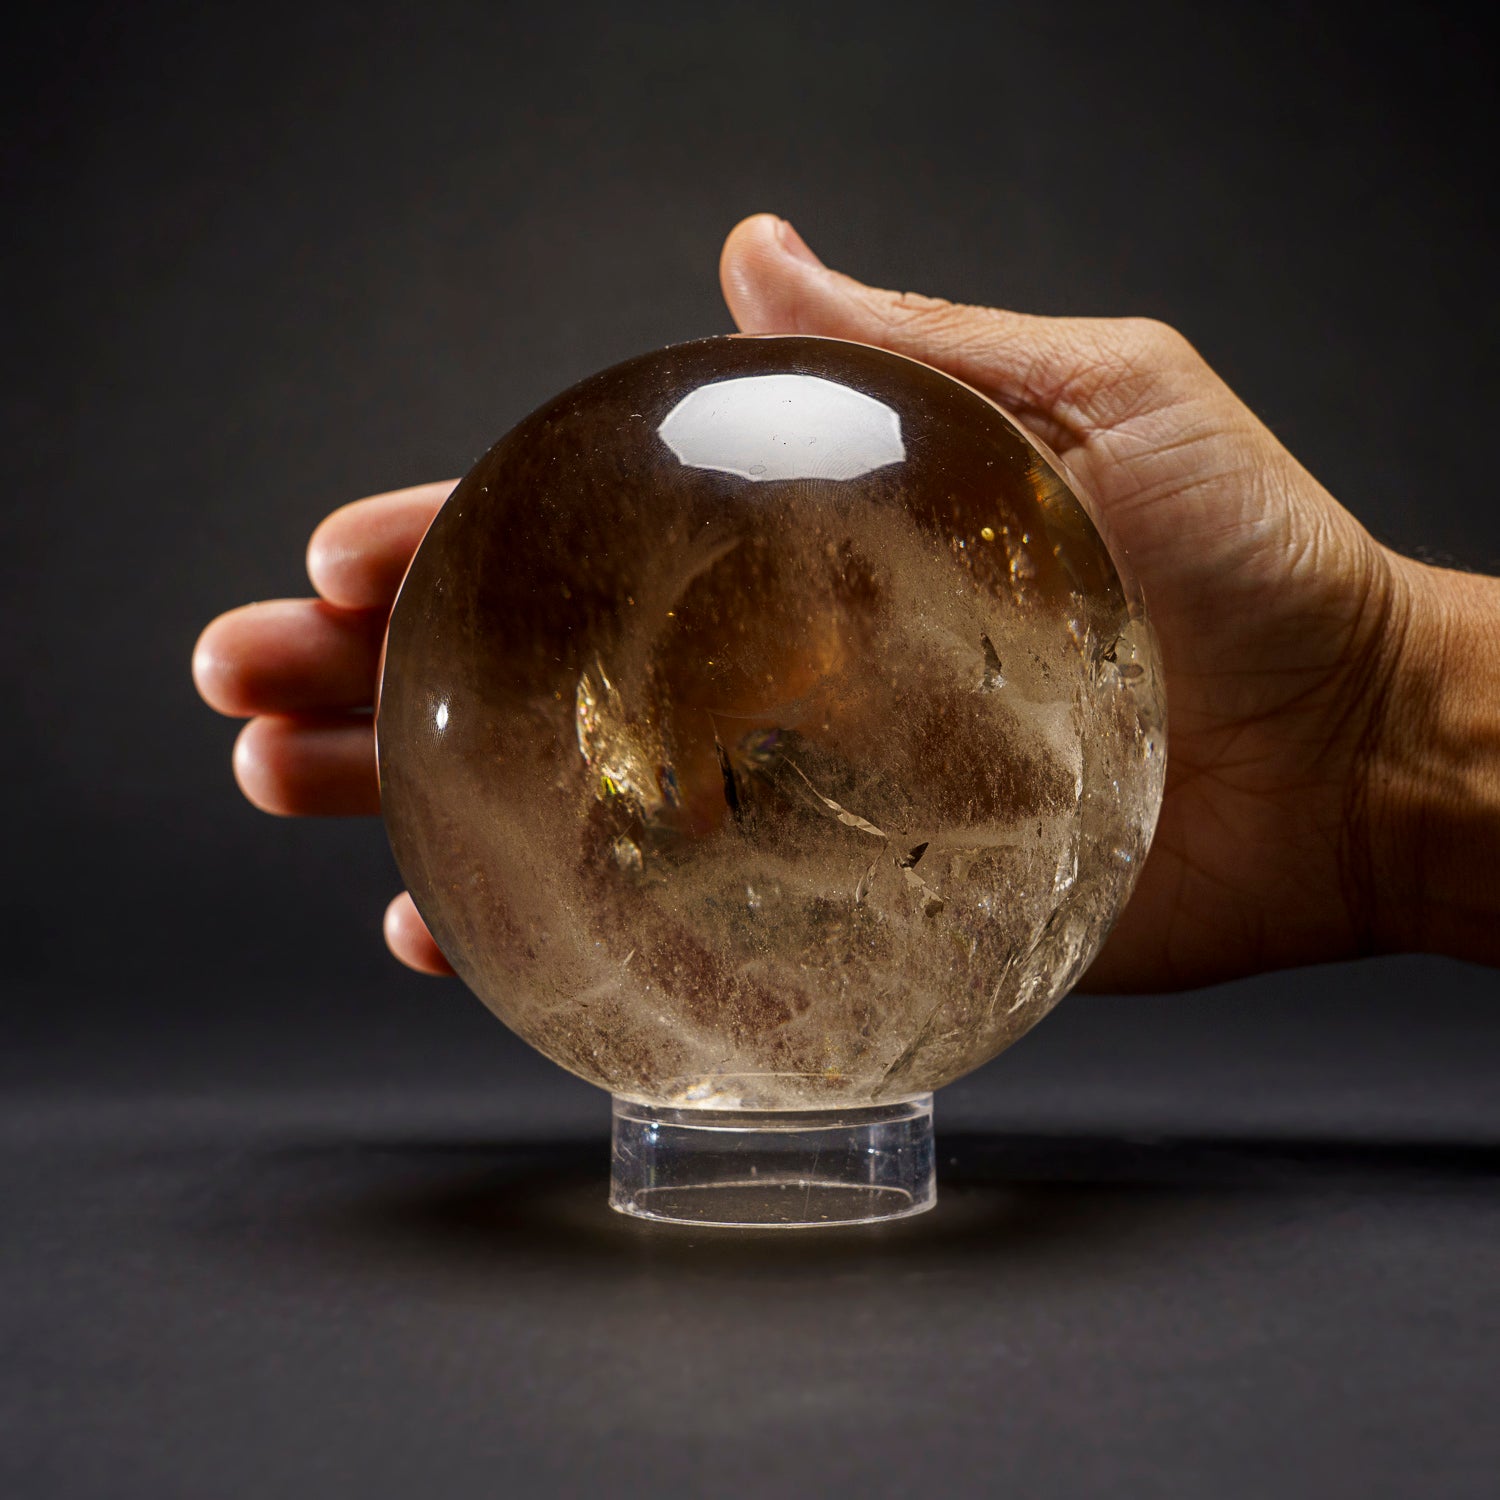 Genuine Polished Smoky Quartz Sphere from Brazil (4.5", 4 lbs)